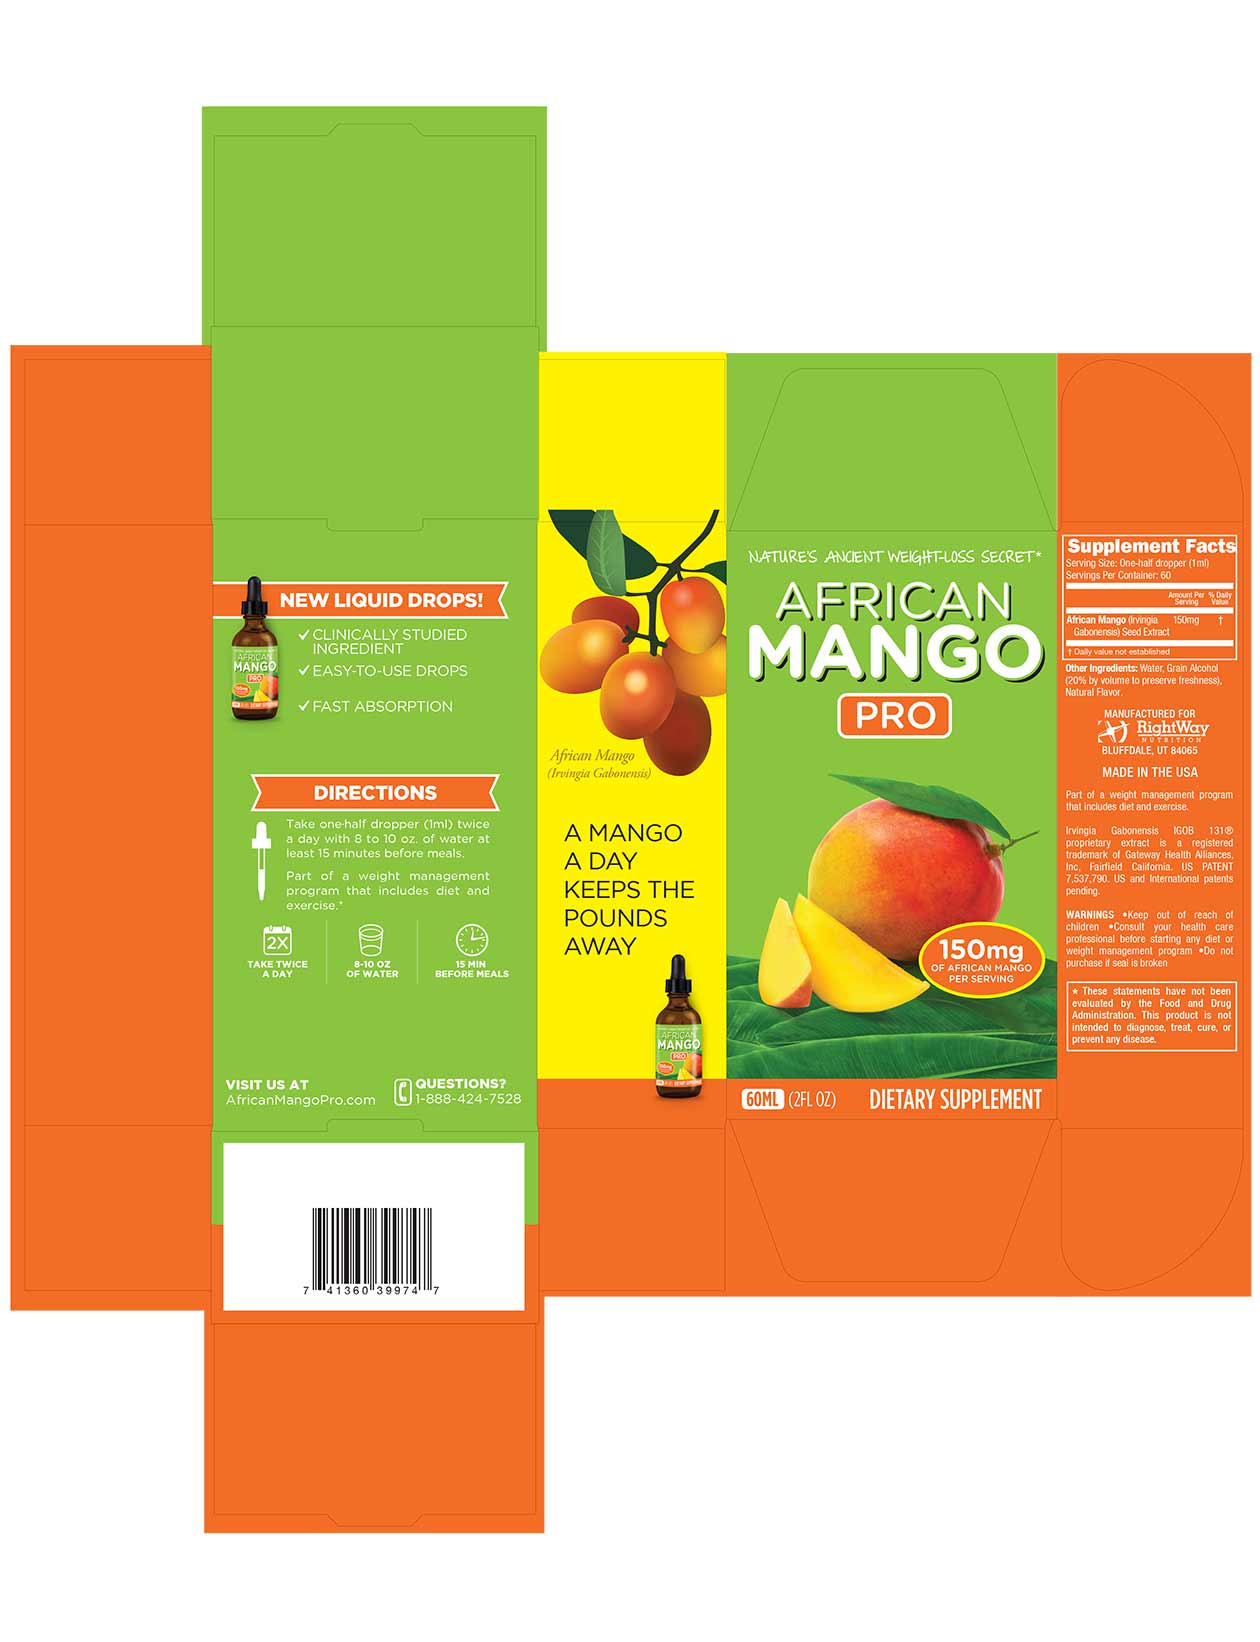 African Mango Pro Box Dieline